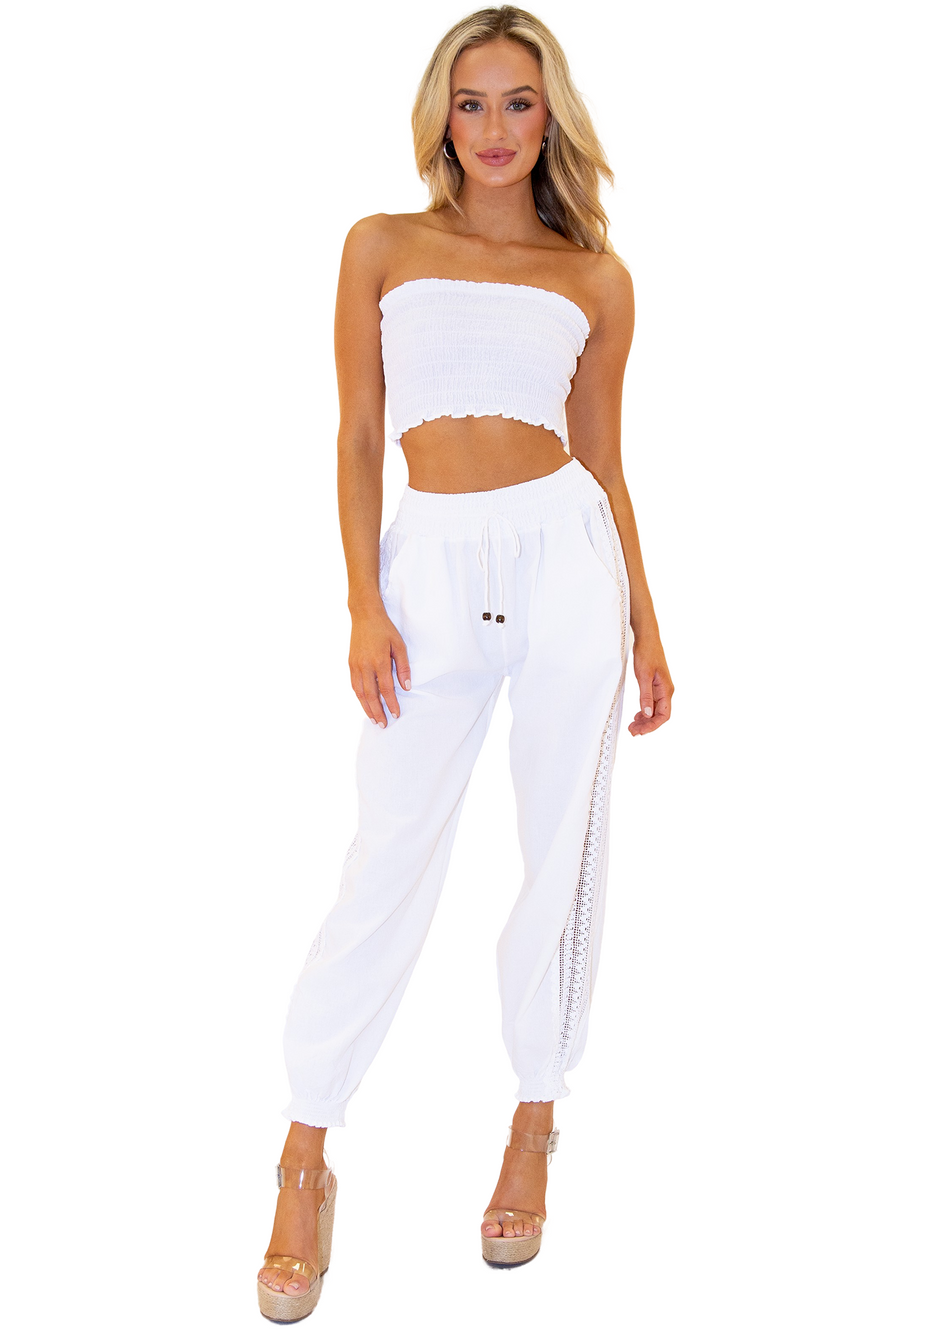 NW1326 - White Cotton Pants